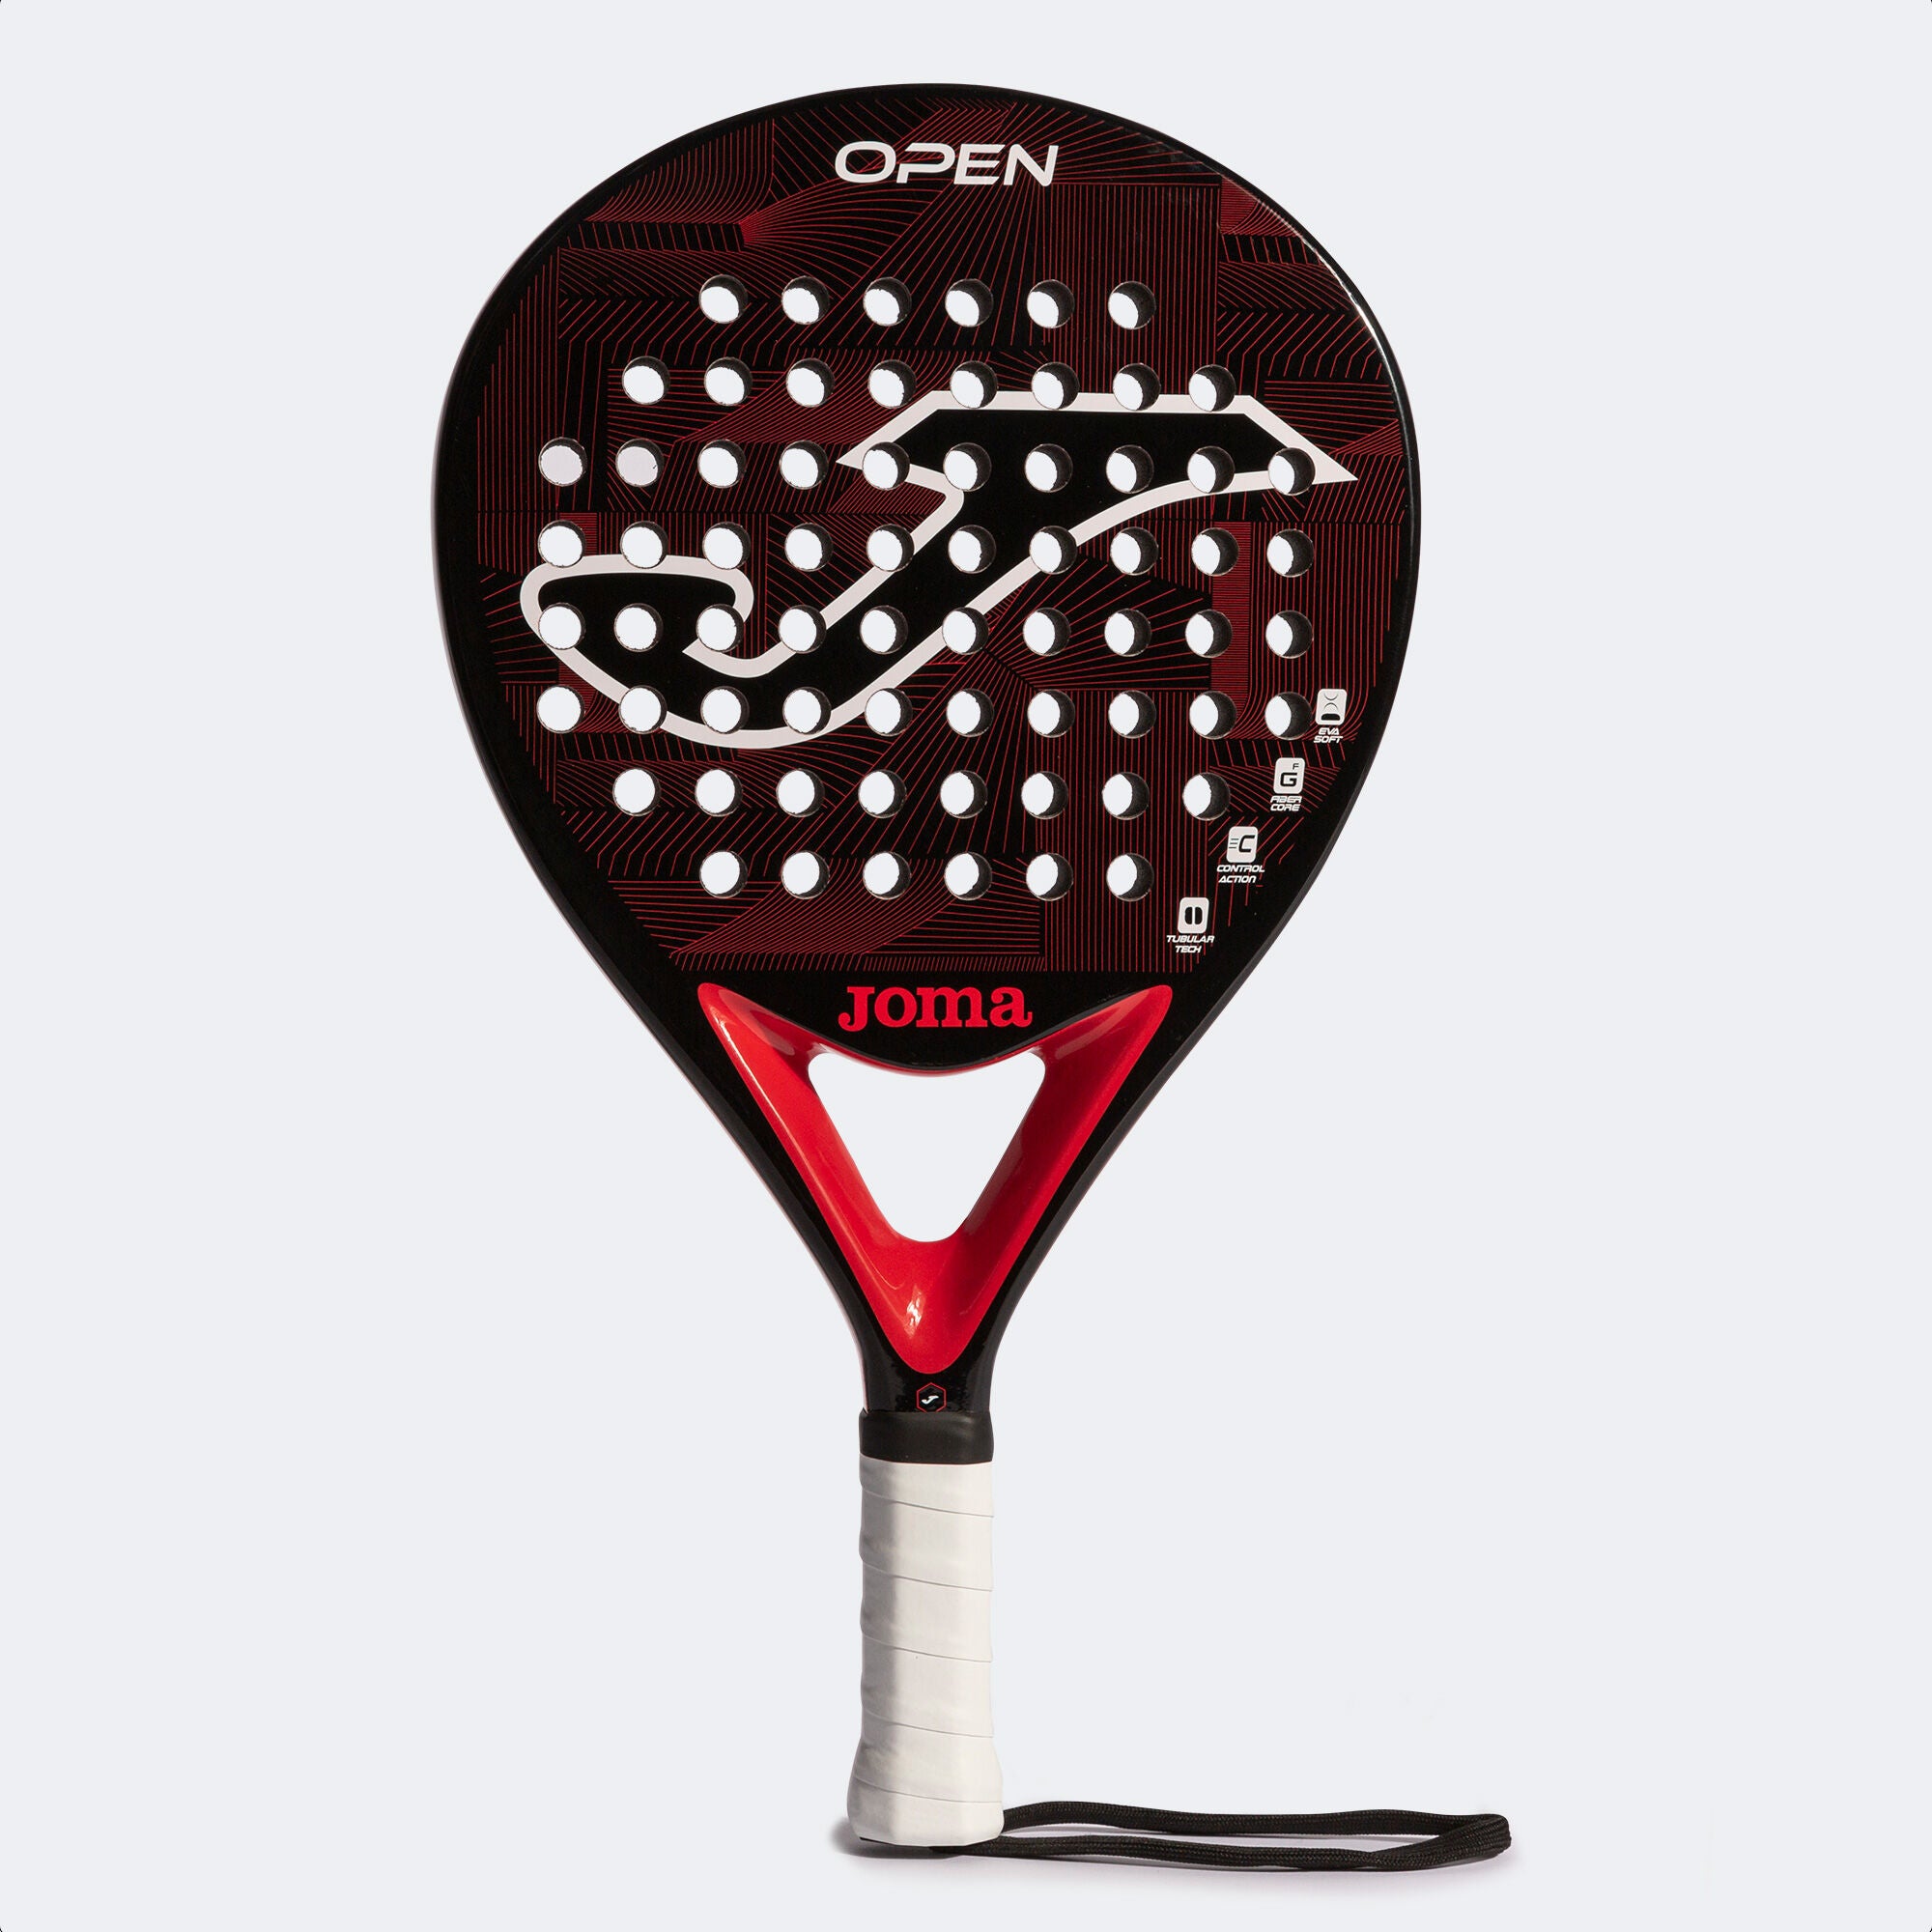 Joma Open black red padel racket